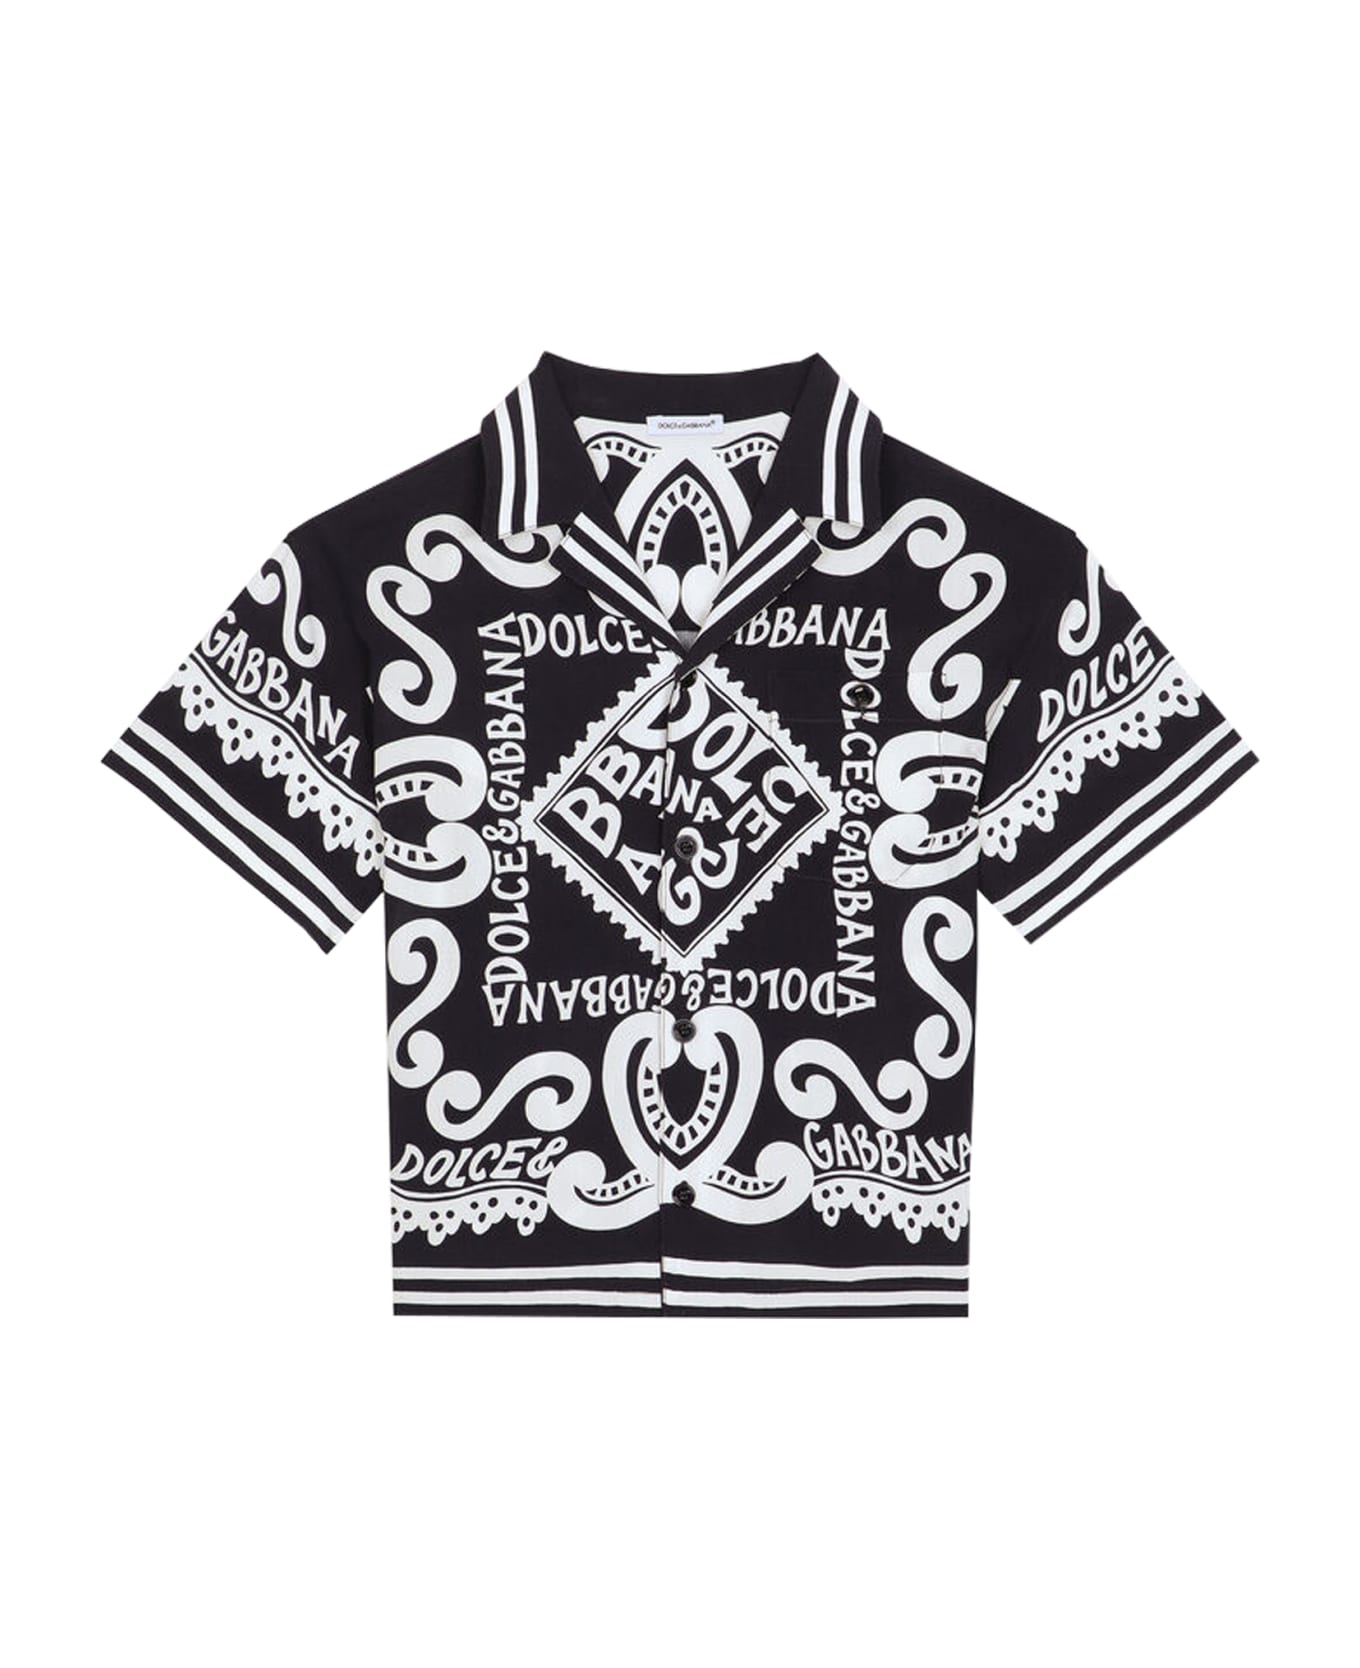 Dolce & Gabbana Javanese Shirt With Marine Print - Multicolor